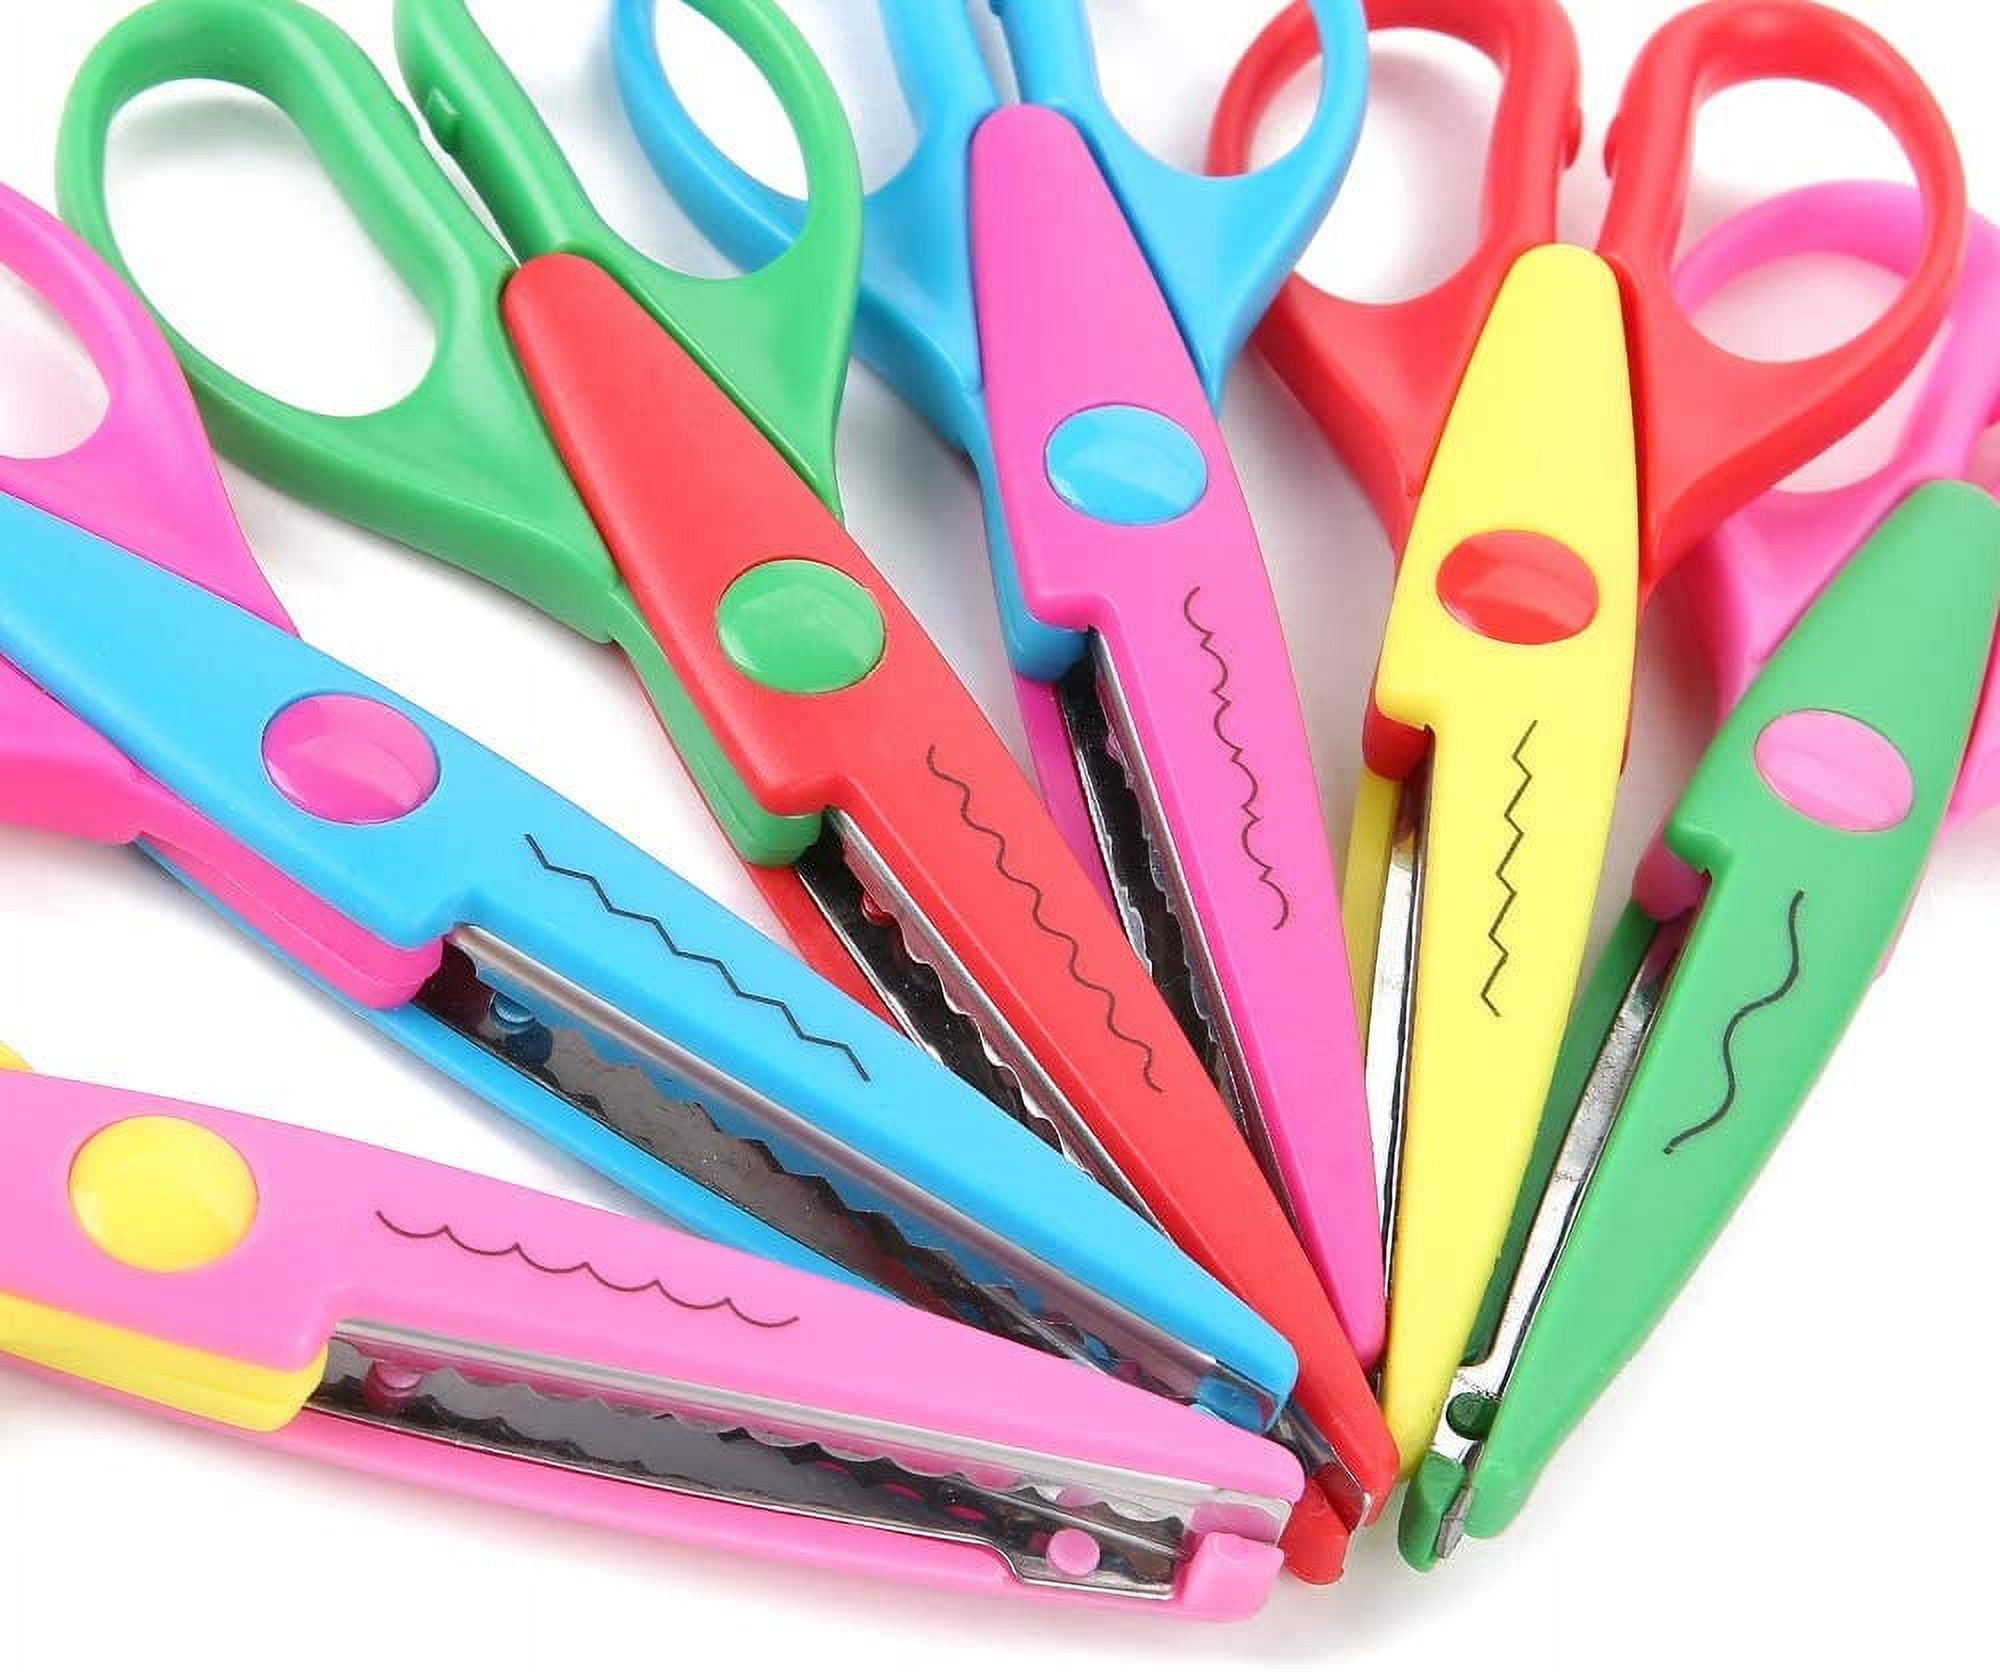 TROJKA Scissors, set of 3, multicolor - IKEA